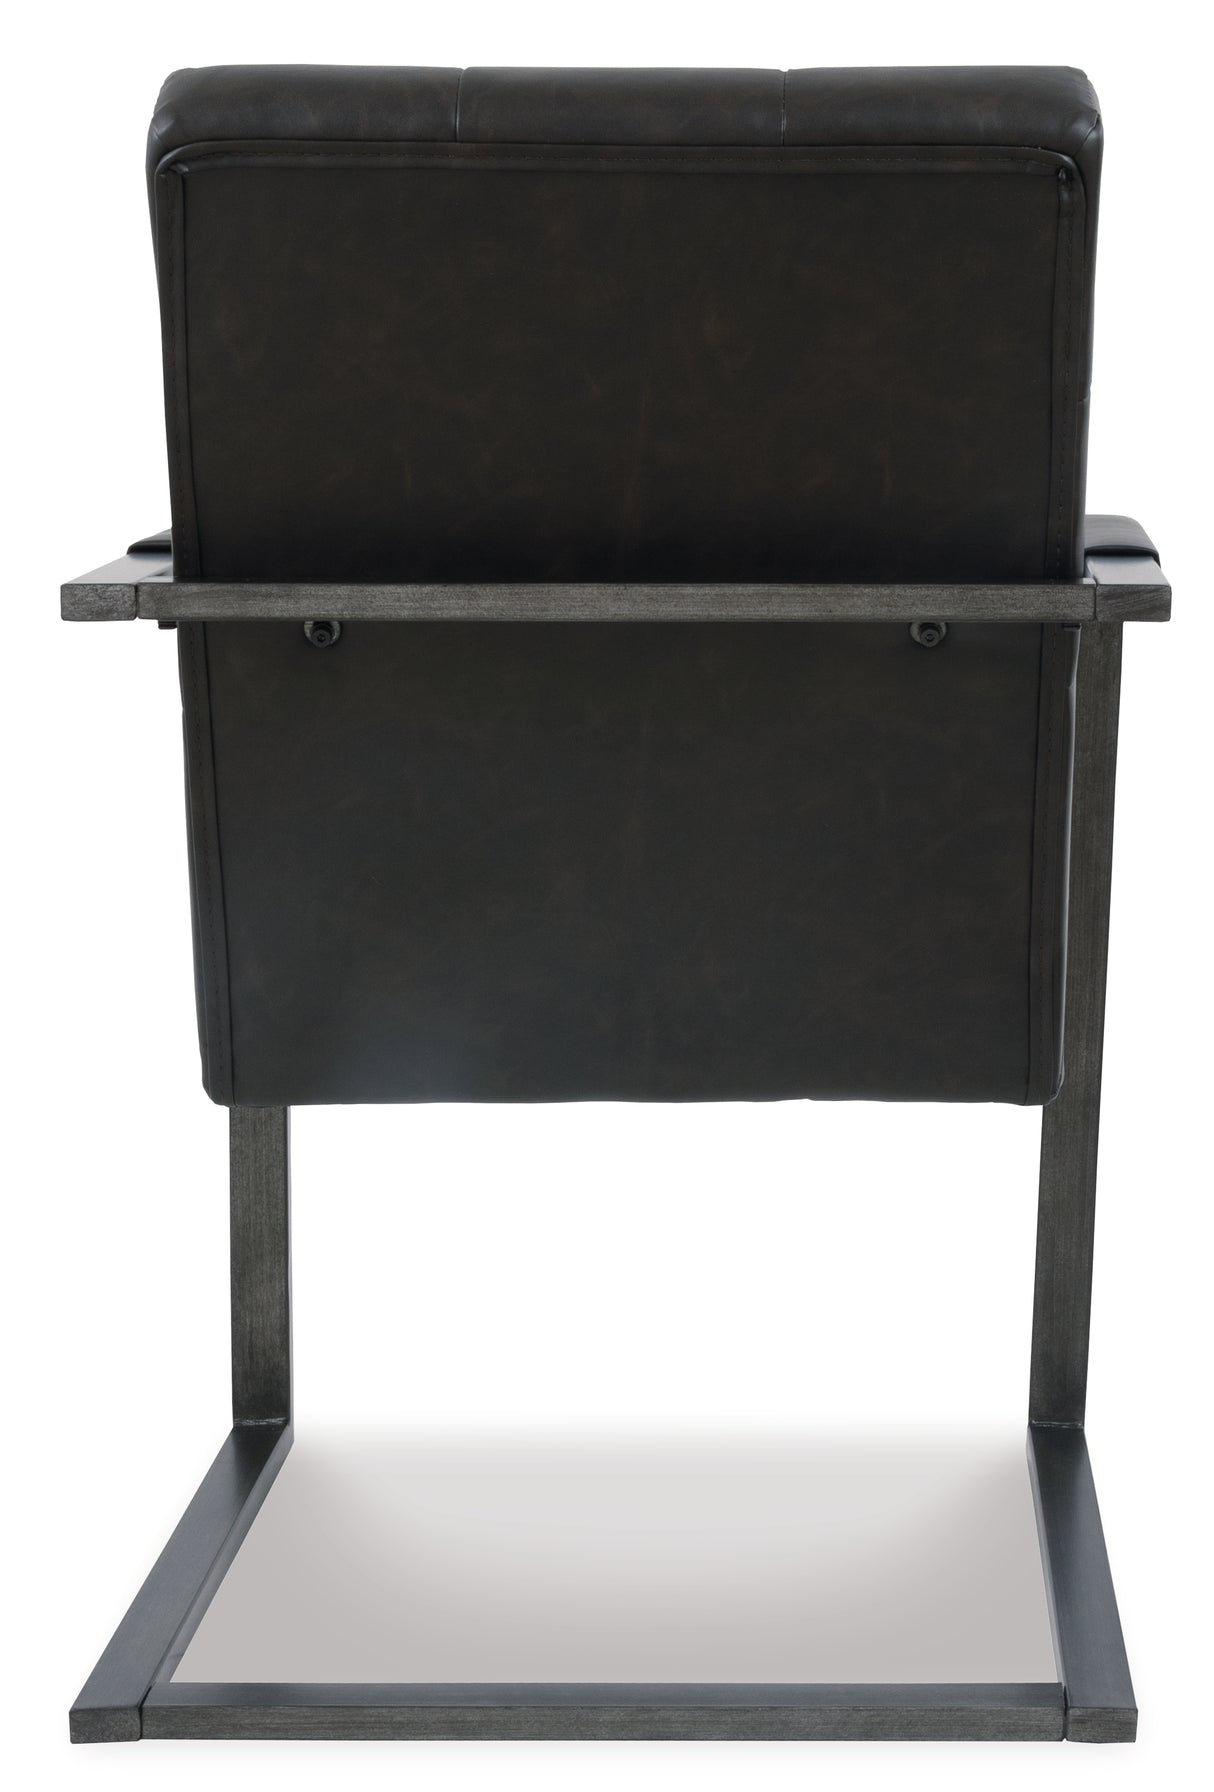 Starmore Black Home Office Desk Chair